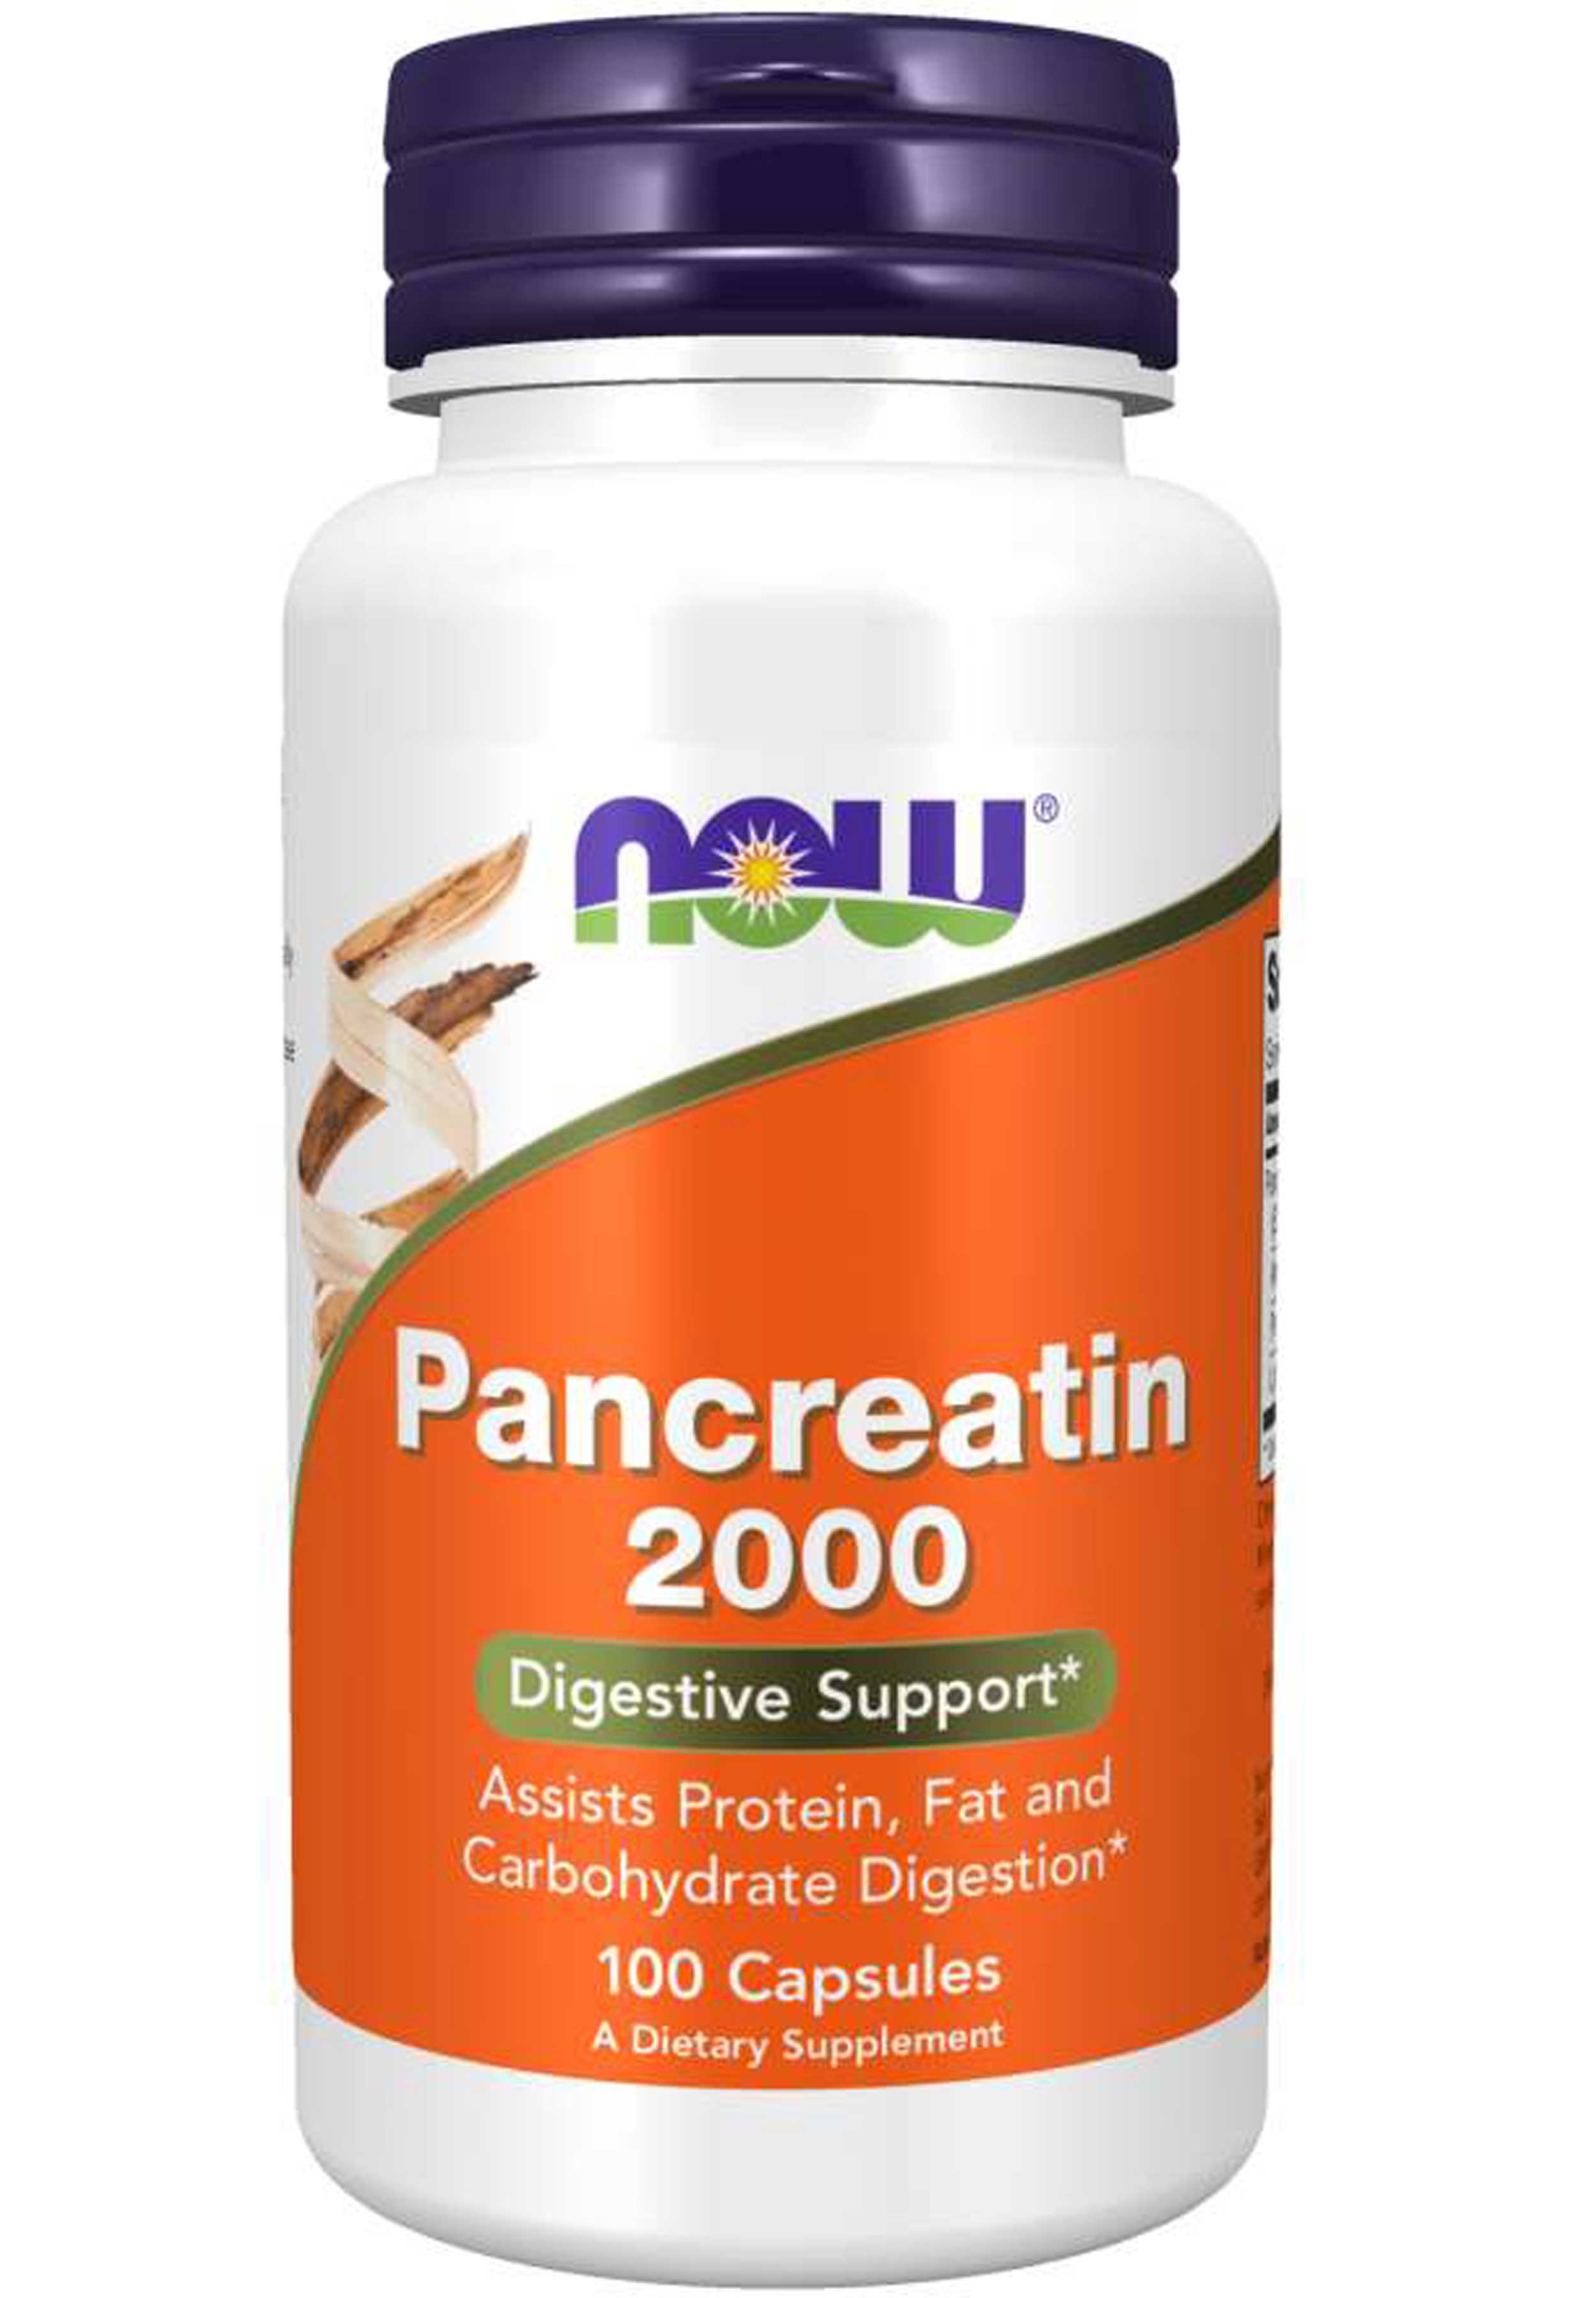 Now Pancreatin 2000 mg